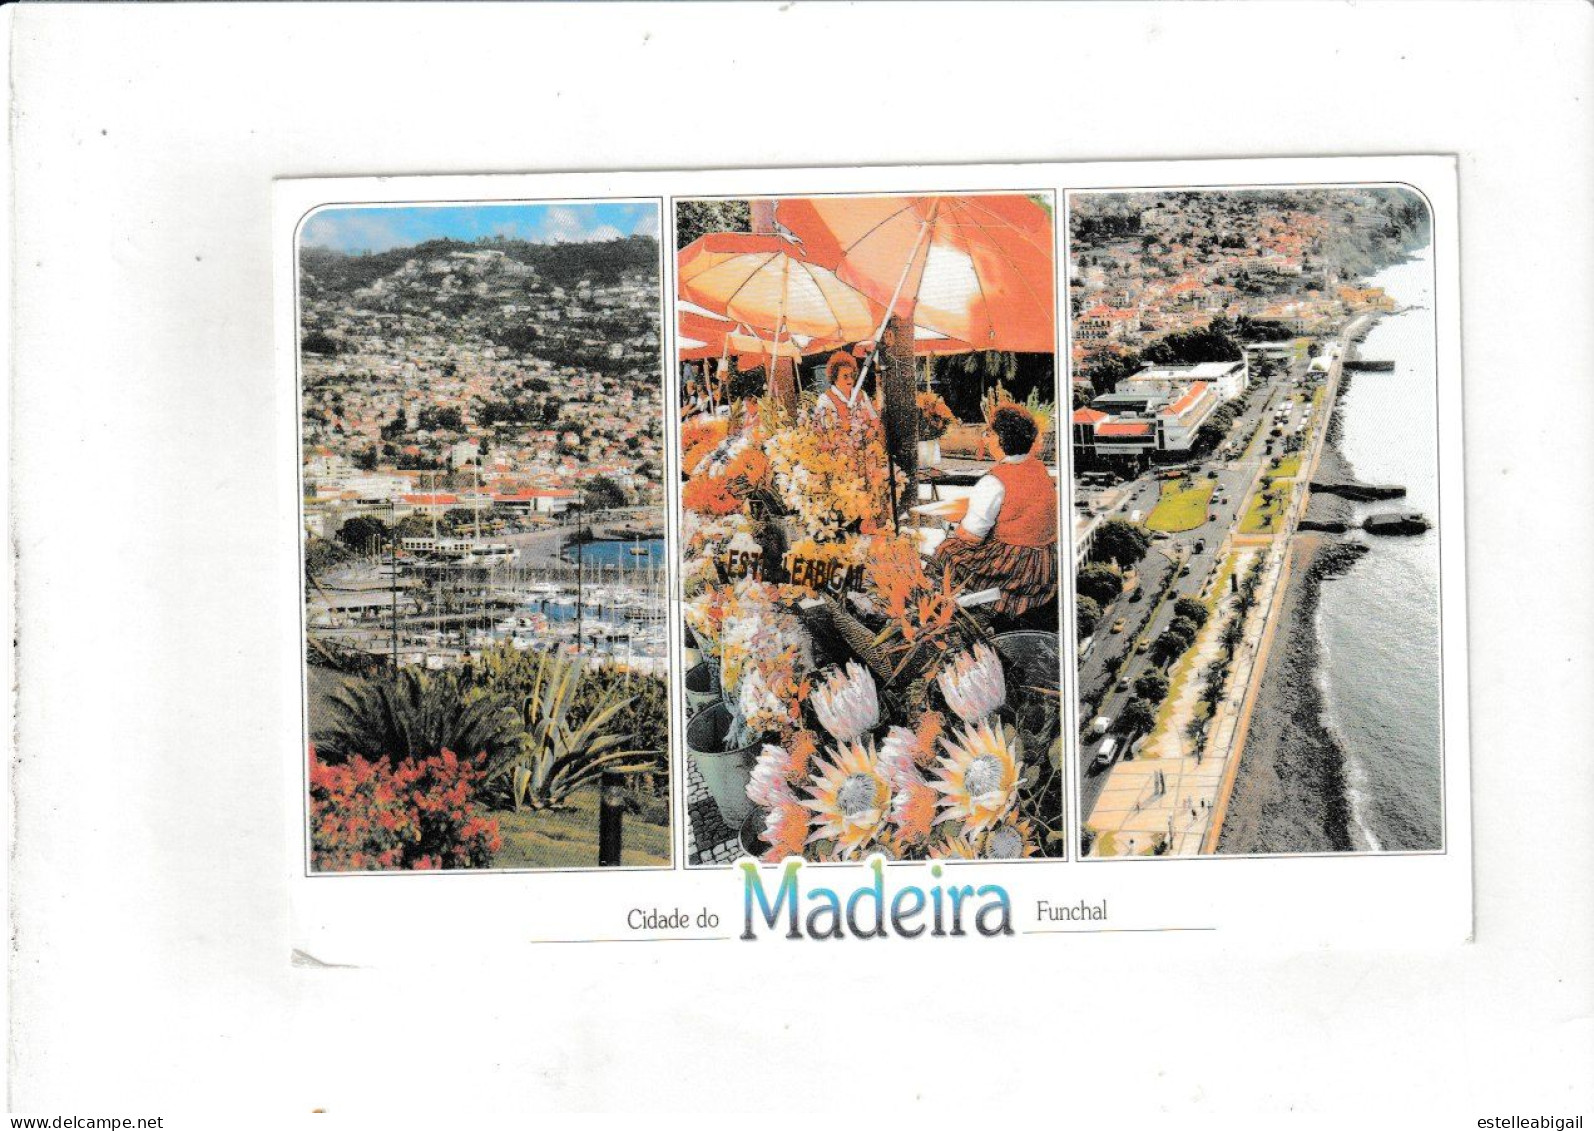 Madeira - Madeira